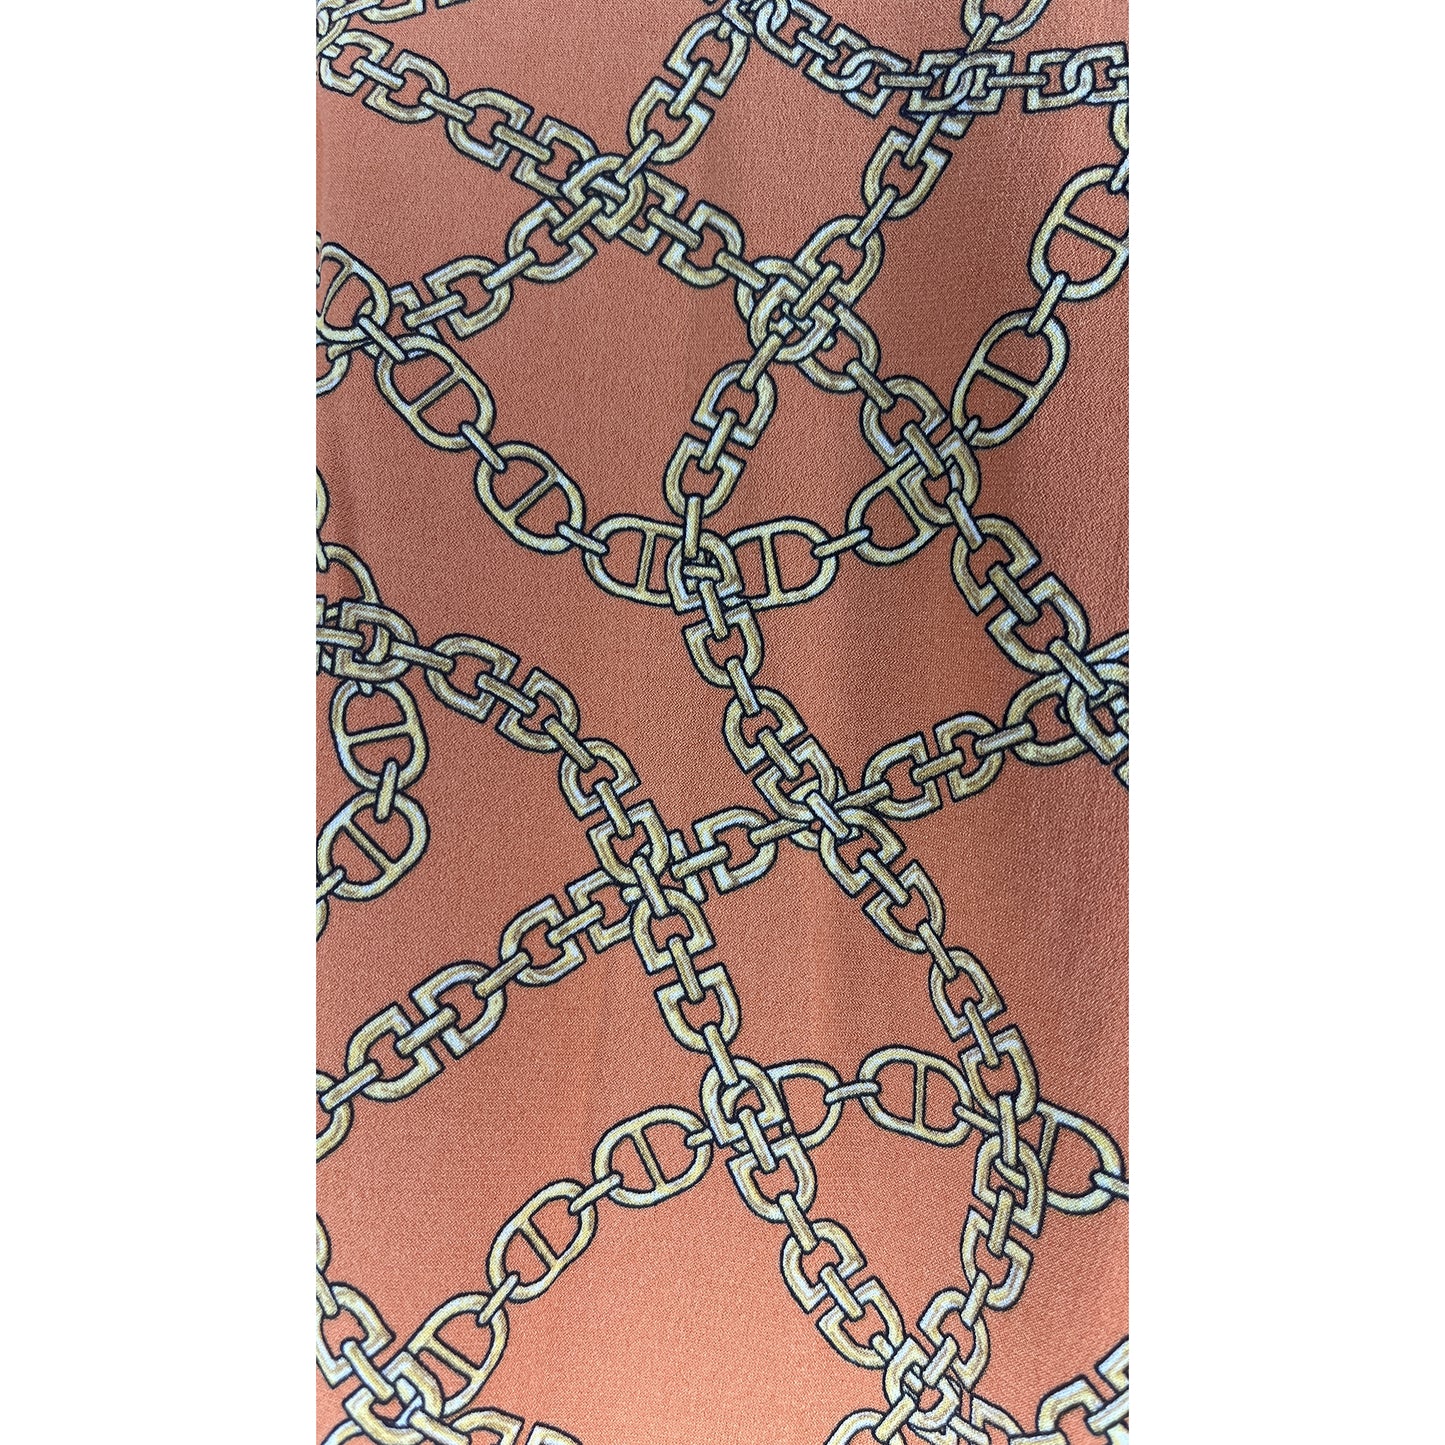 Michael Kors Top Long Sleeve Gold Chain Pattern Size M SKU 000418